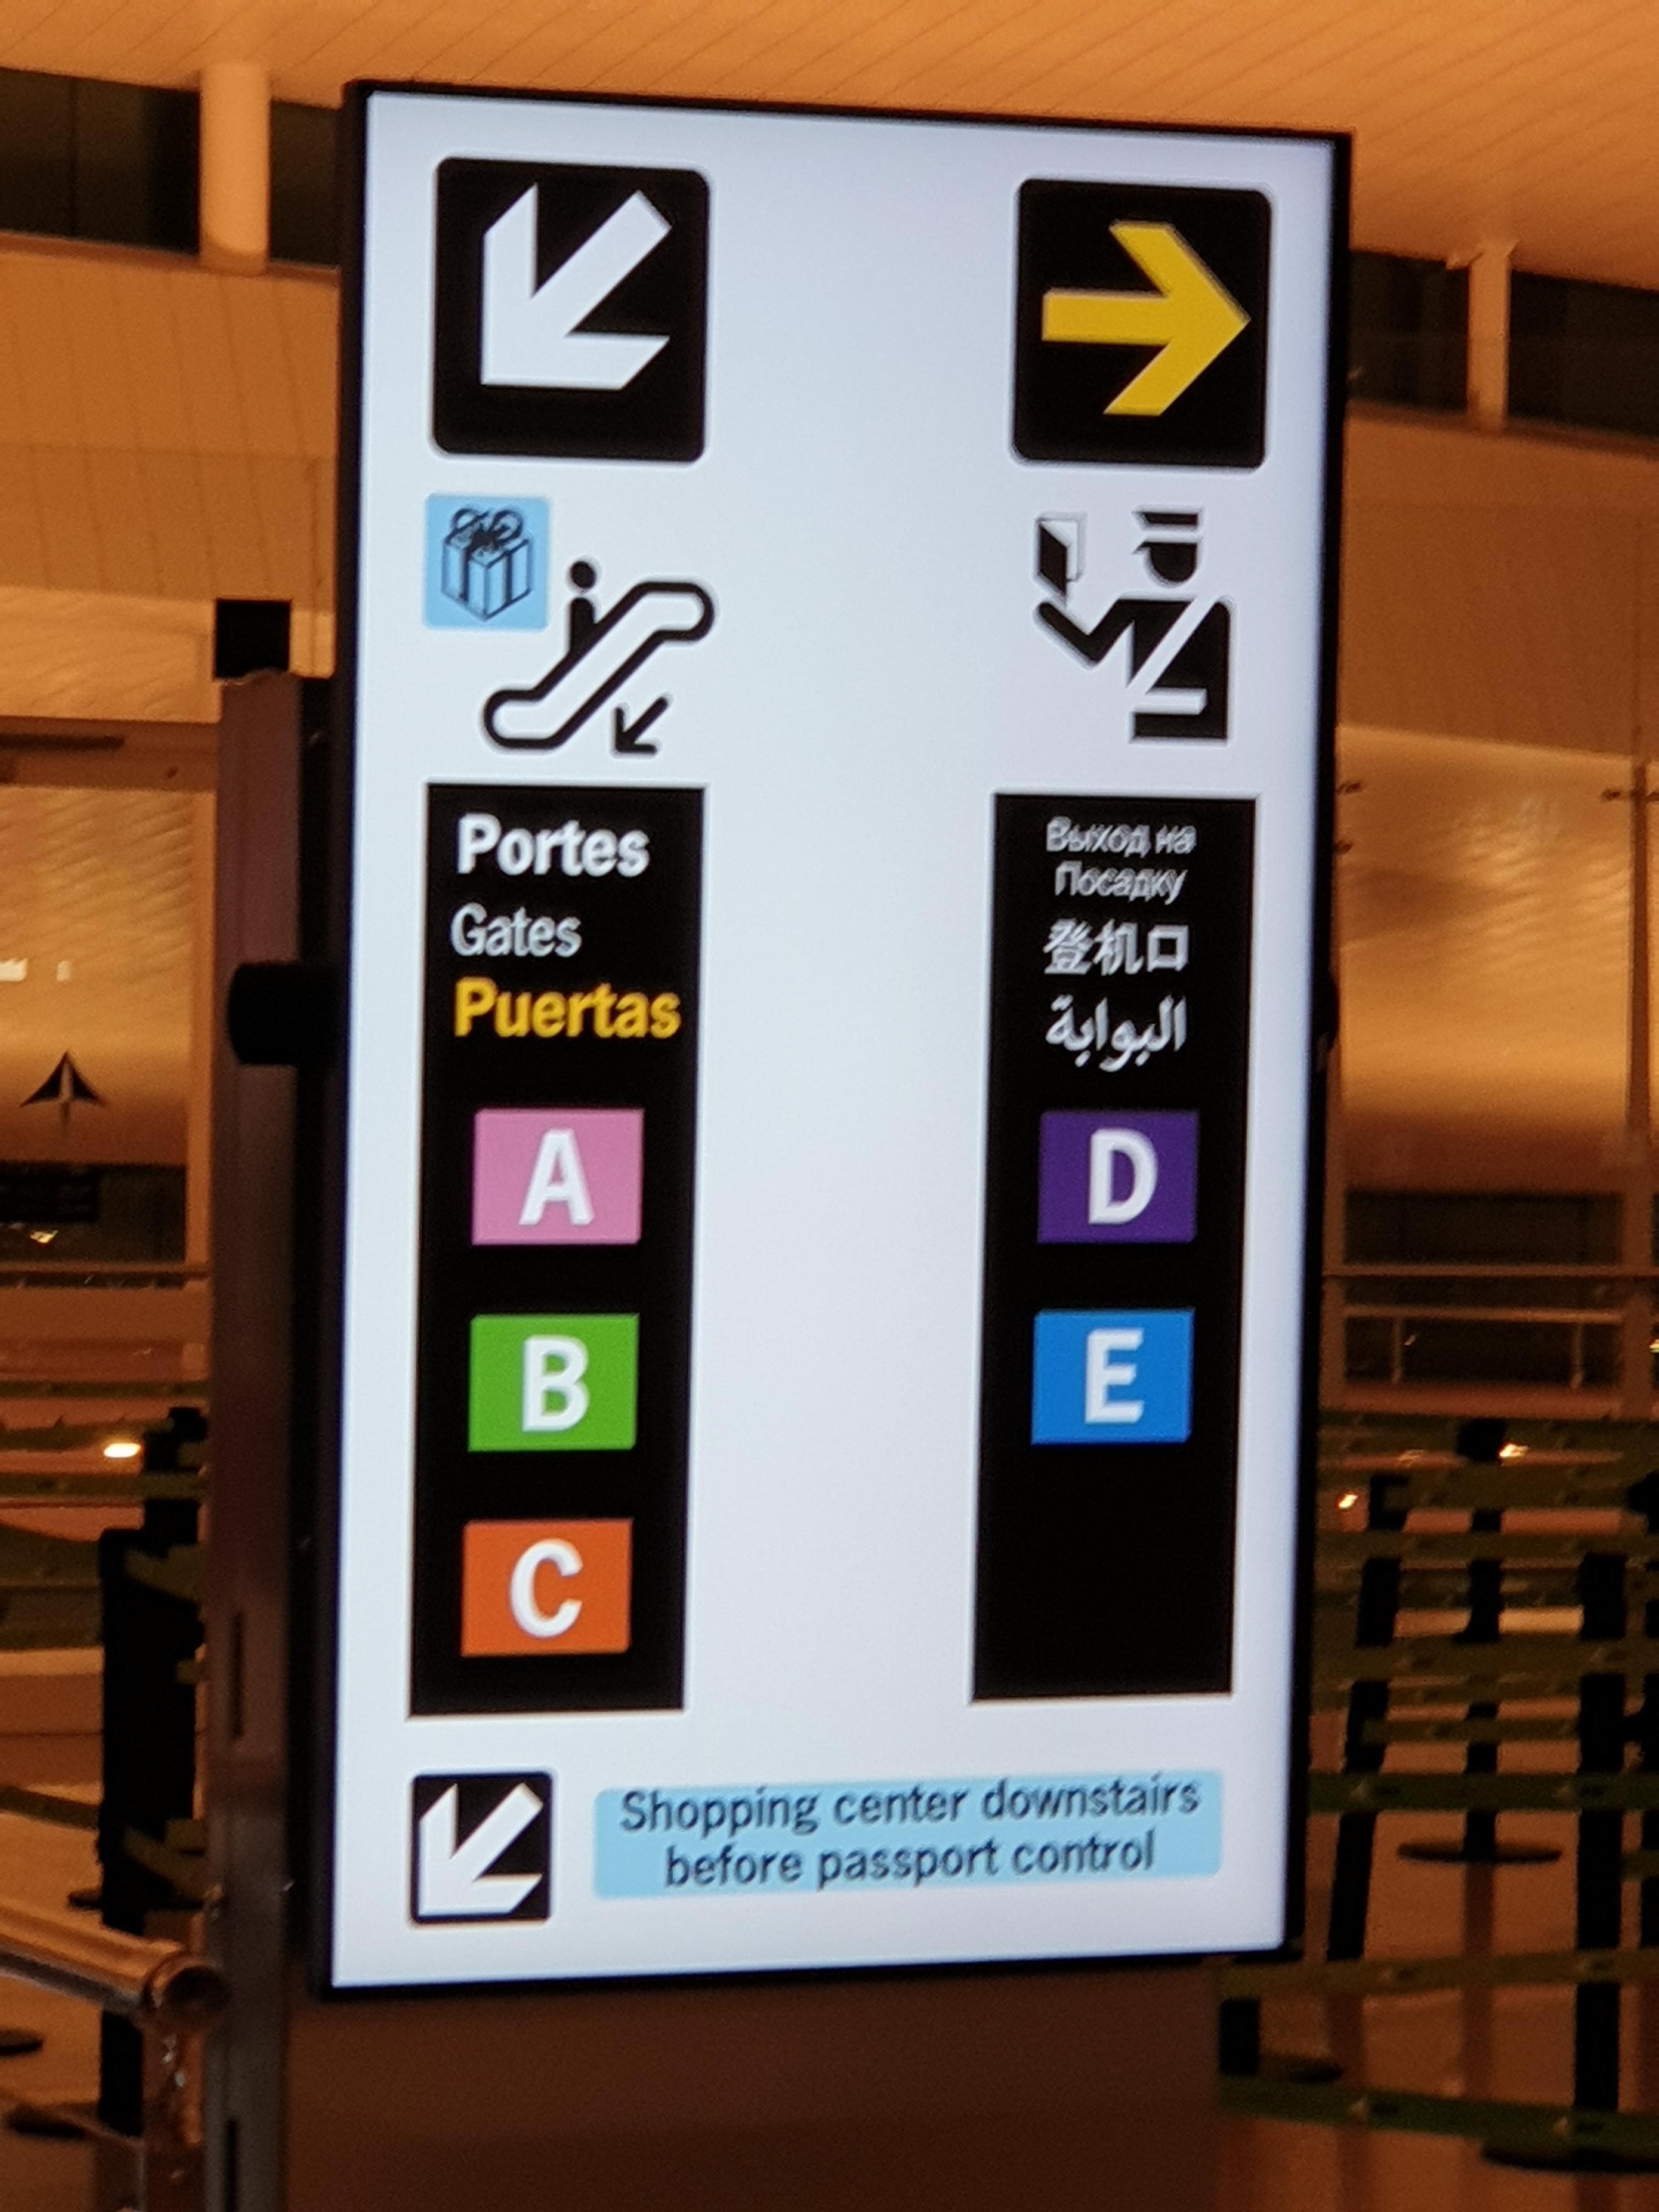 Barcelona Airport Customer Reviews - SKYTRAX